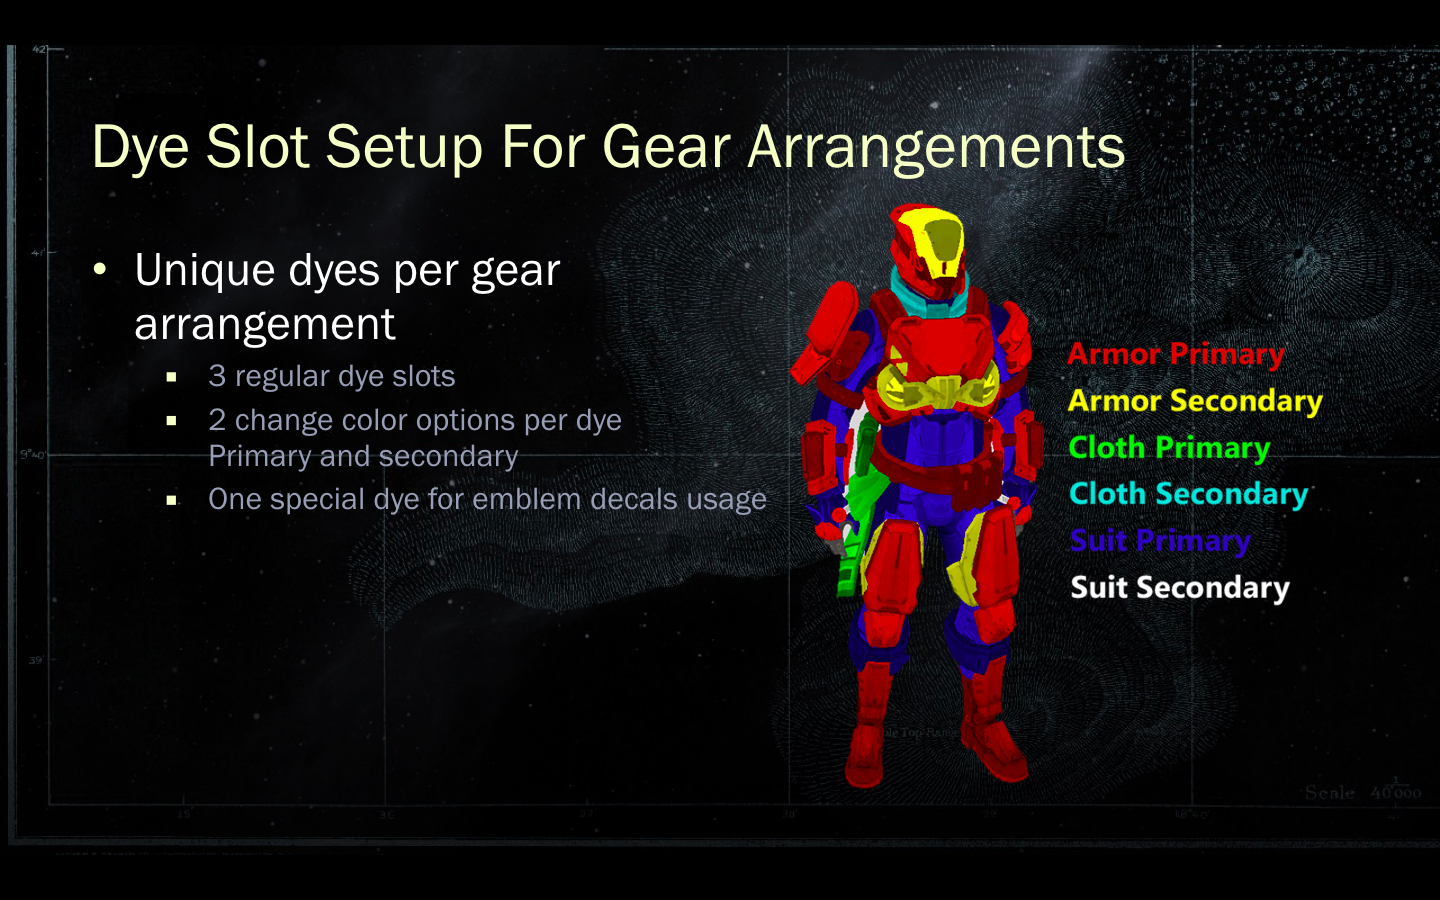 Siggraph 2014 - Dye Slot Setup For Gear Arrangements